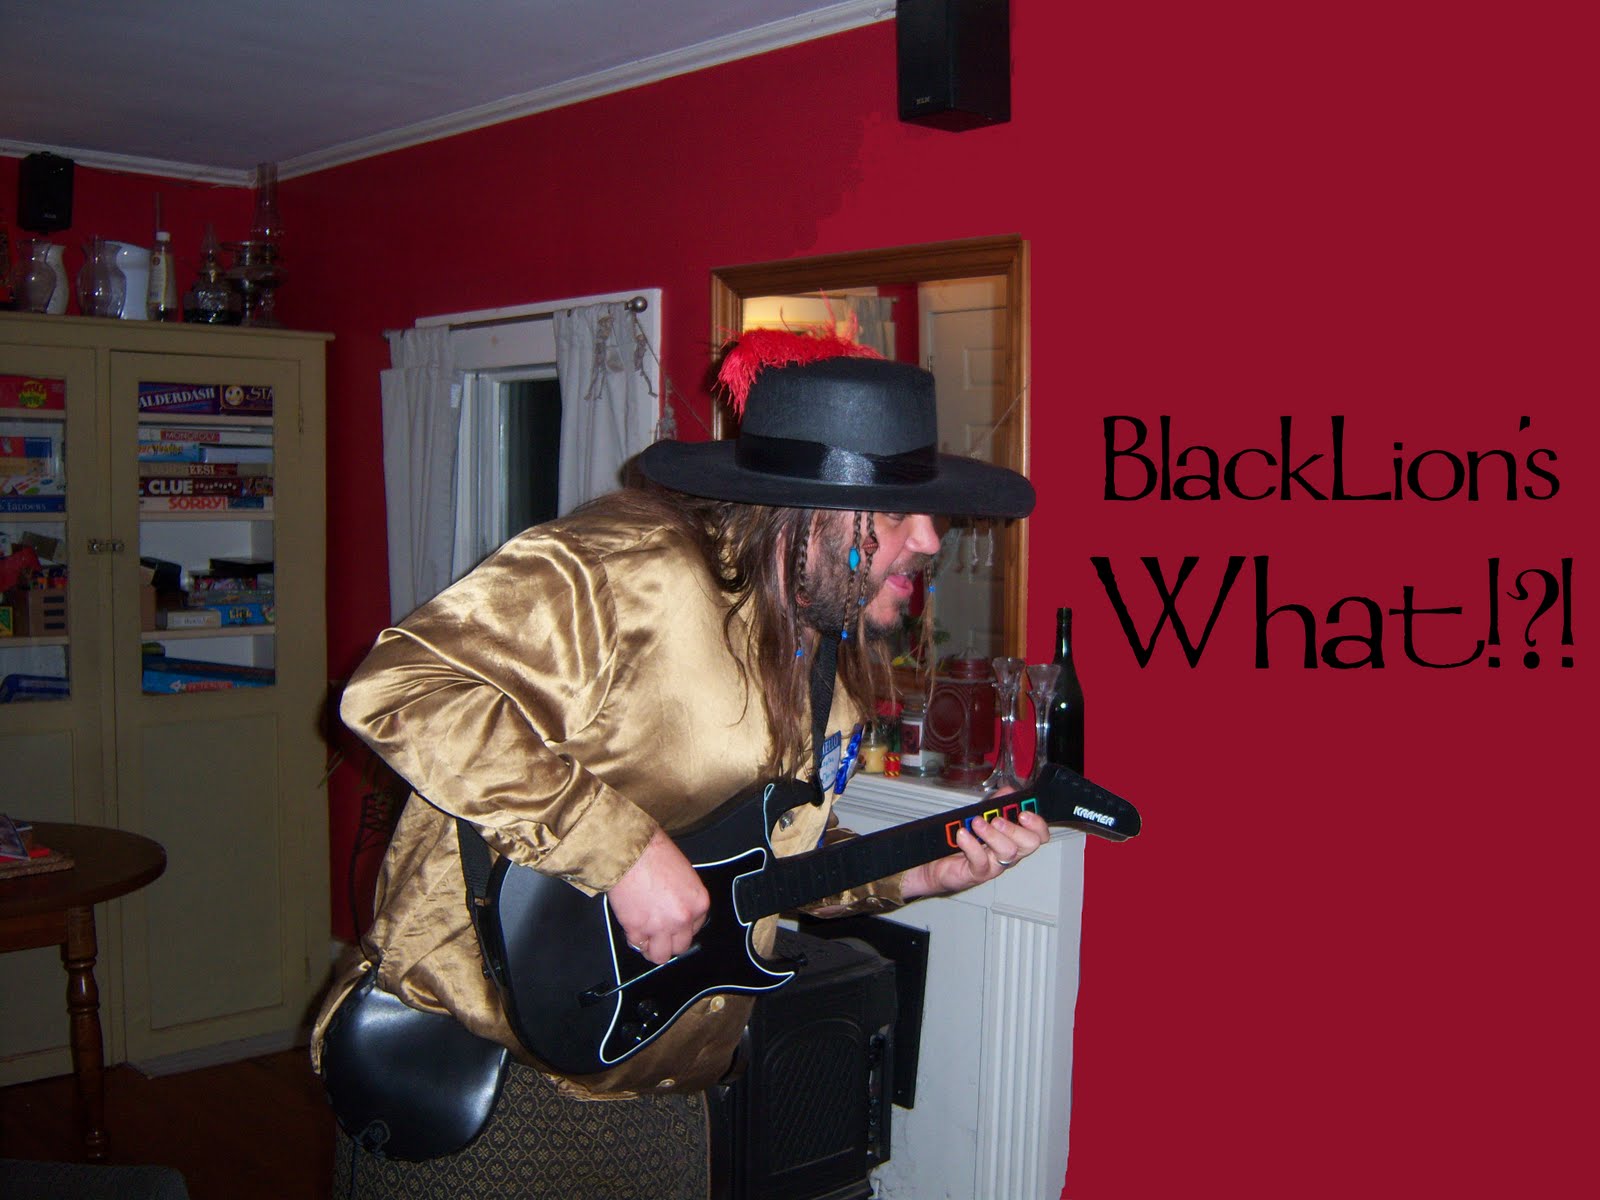 BlackLion's What!?!